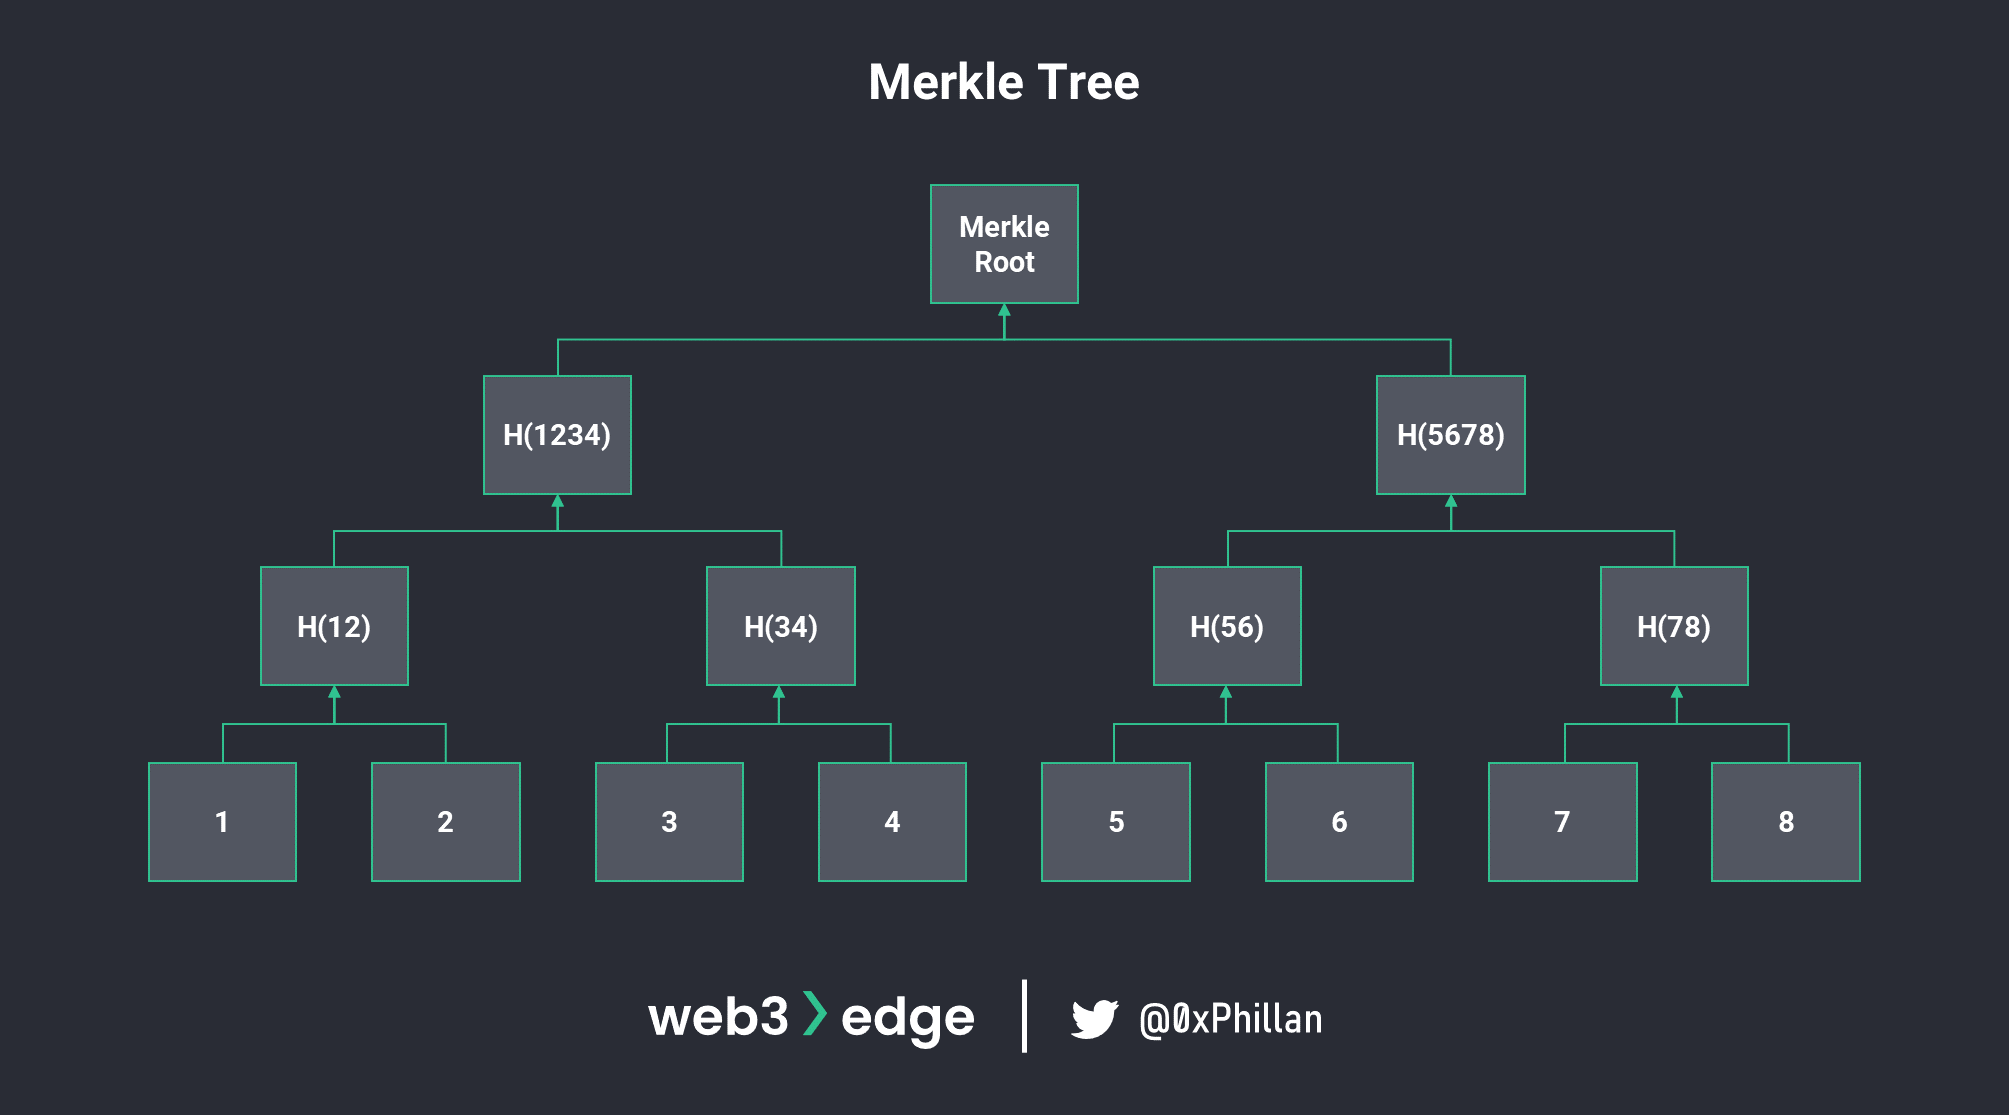 Merkle Tree and Merkle Root